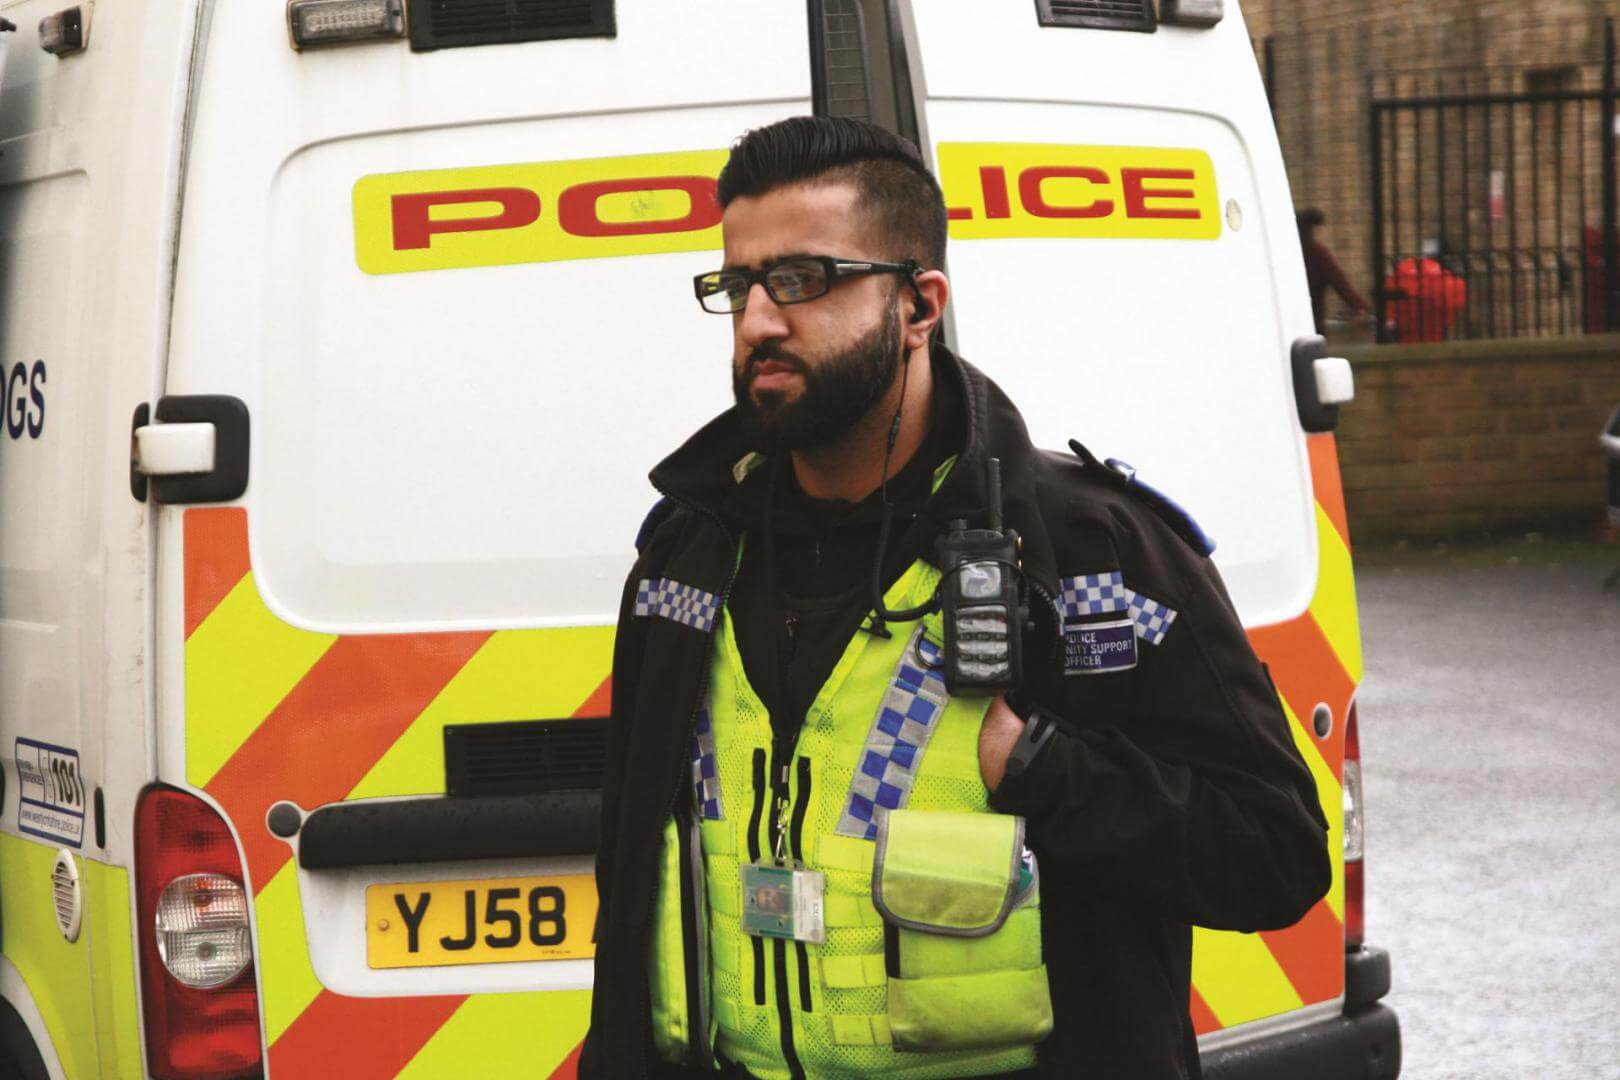 Policeman dressed in full uniform in front of a police van